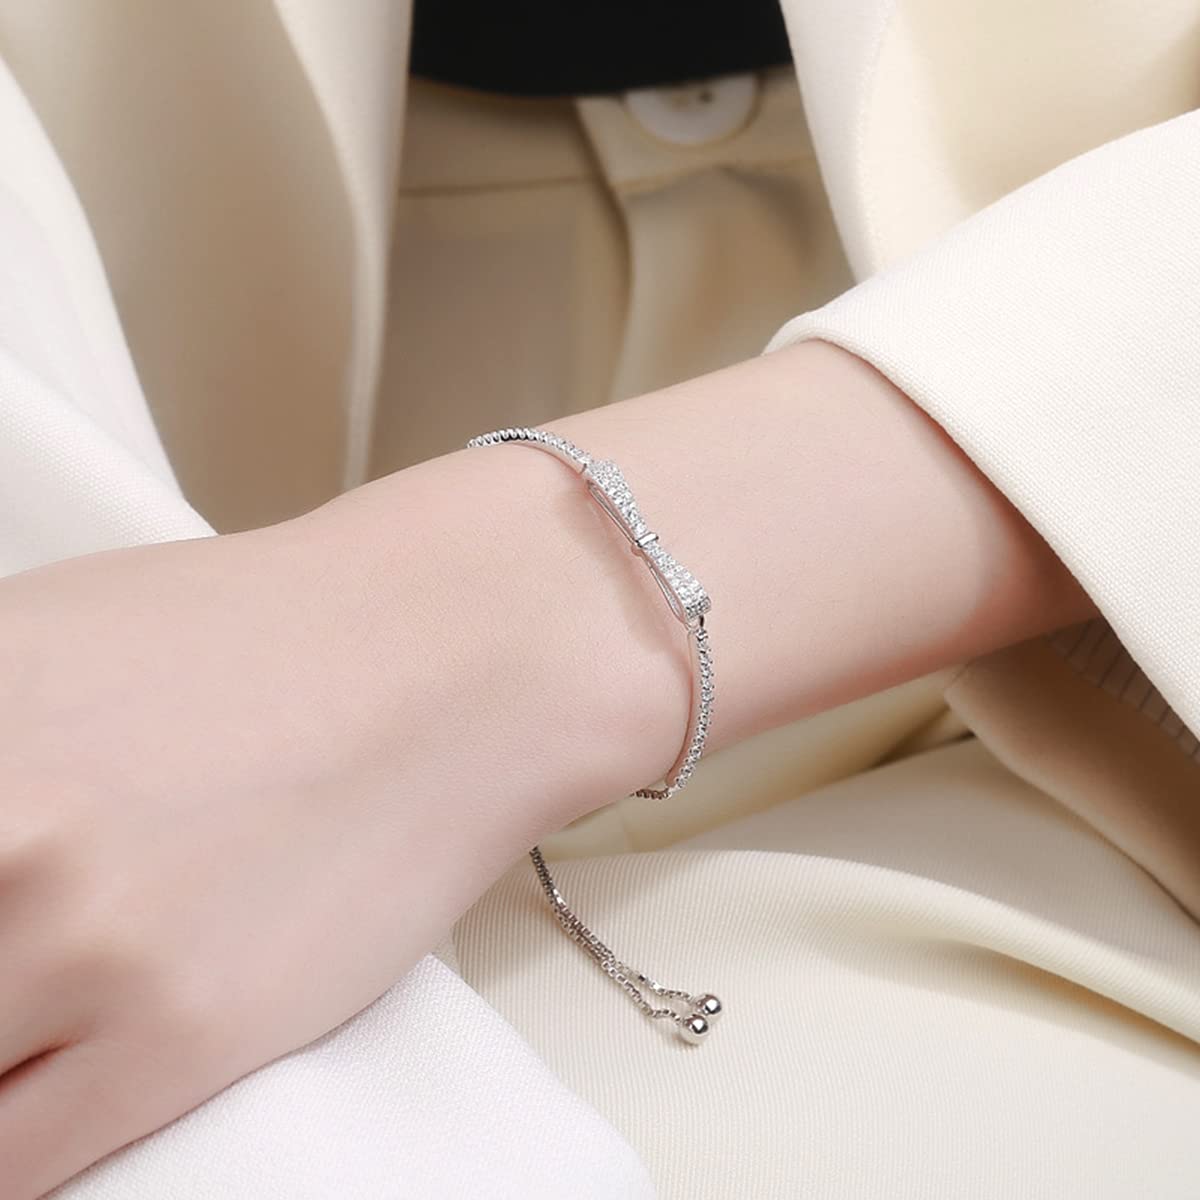 Buy quality Trendy 925 Pure Silver Bracelet For Men in New Delhi